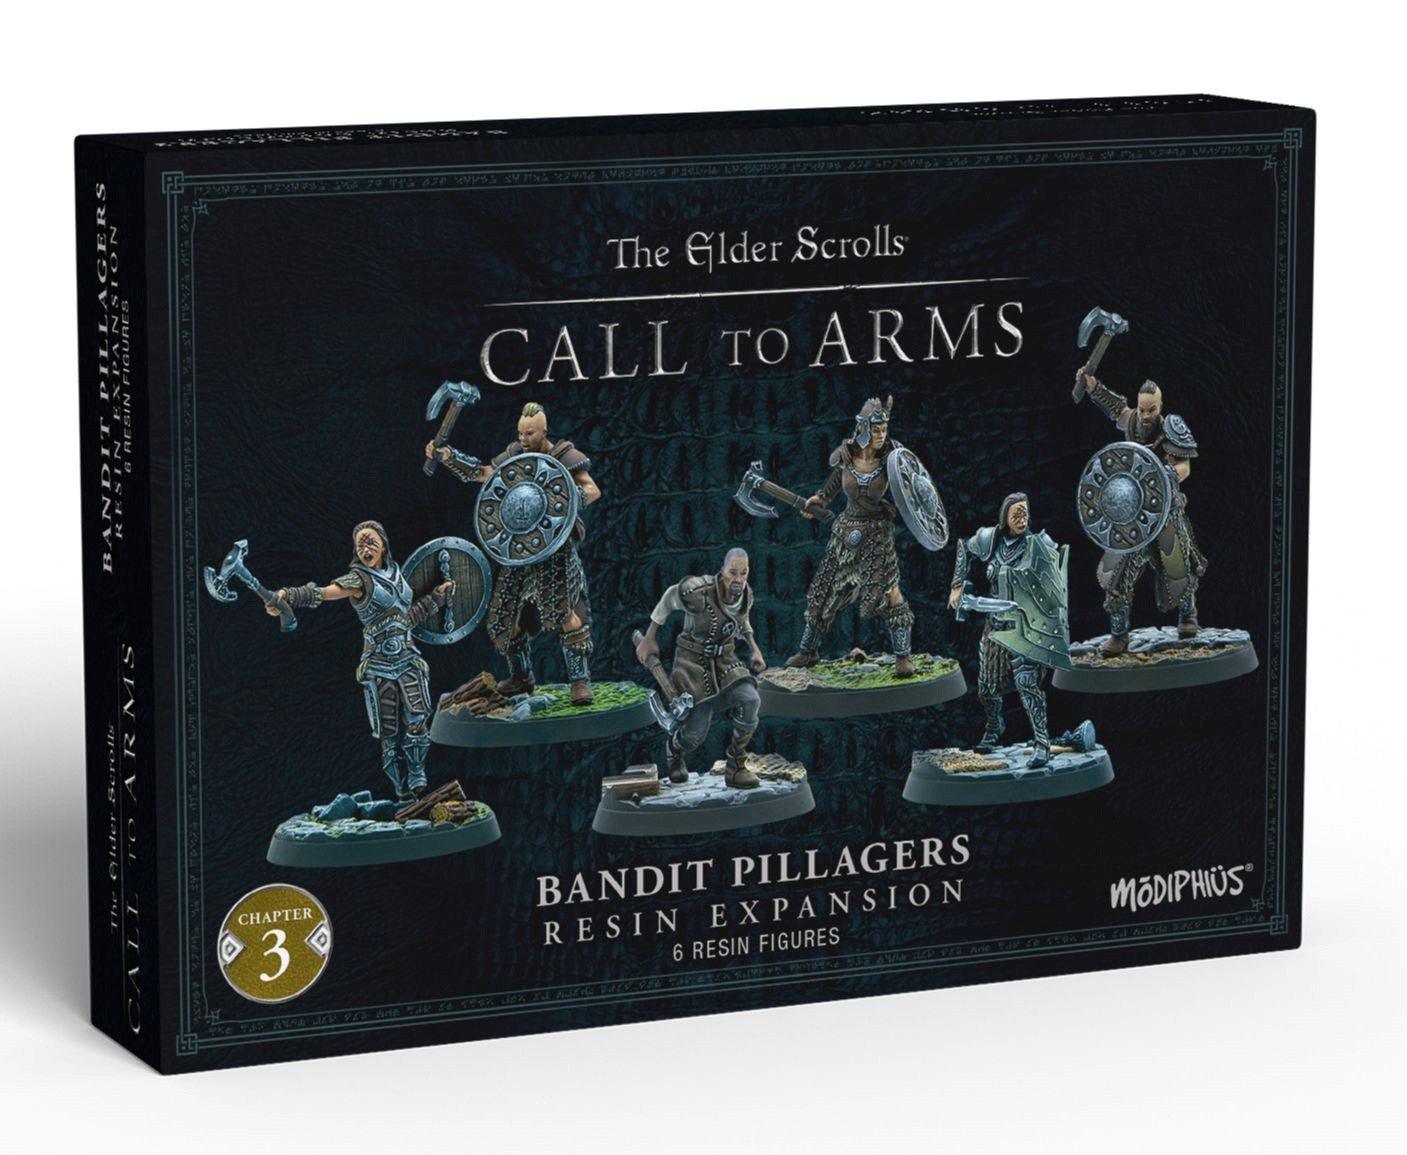 VR-103867 The Elder Scrolls Call to Arms Bandit Pillagers - Modiphius Entertainment - Titan Pop Culture